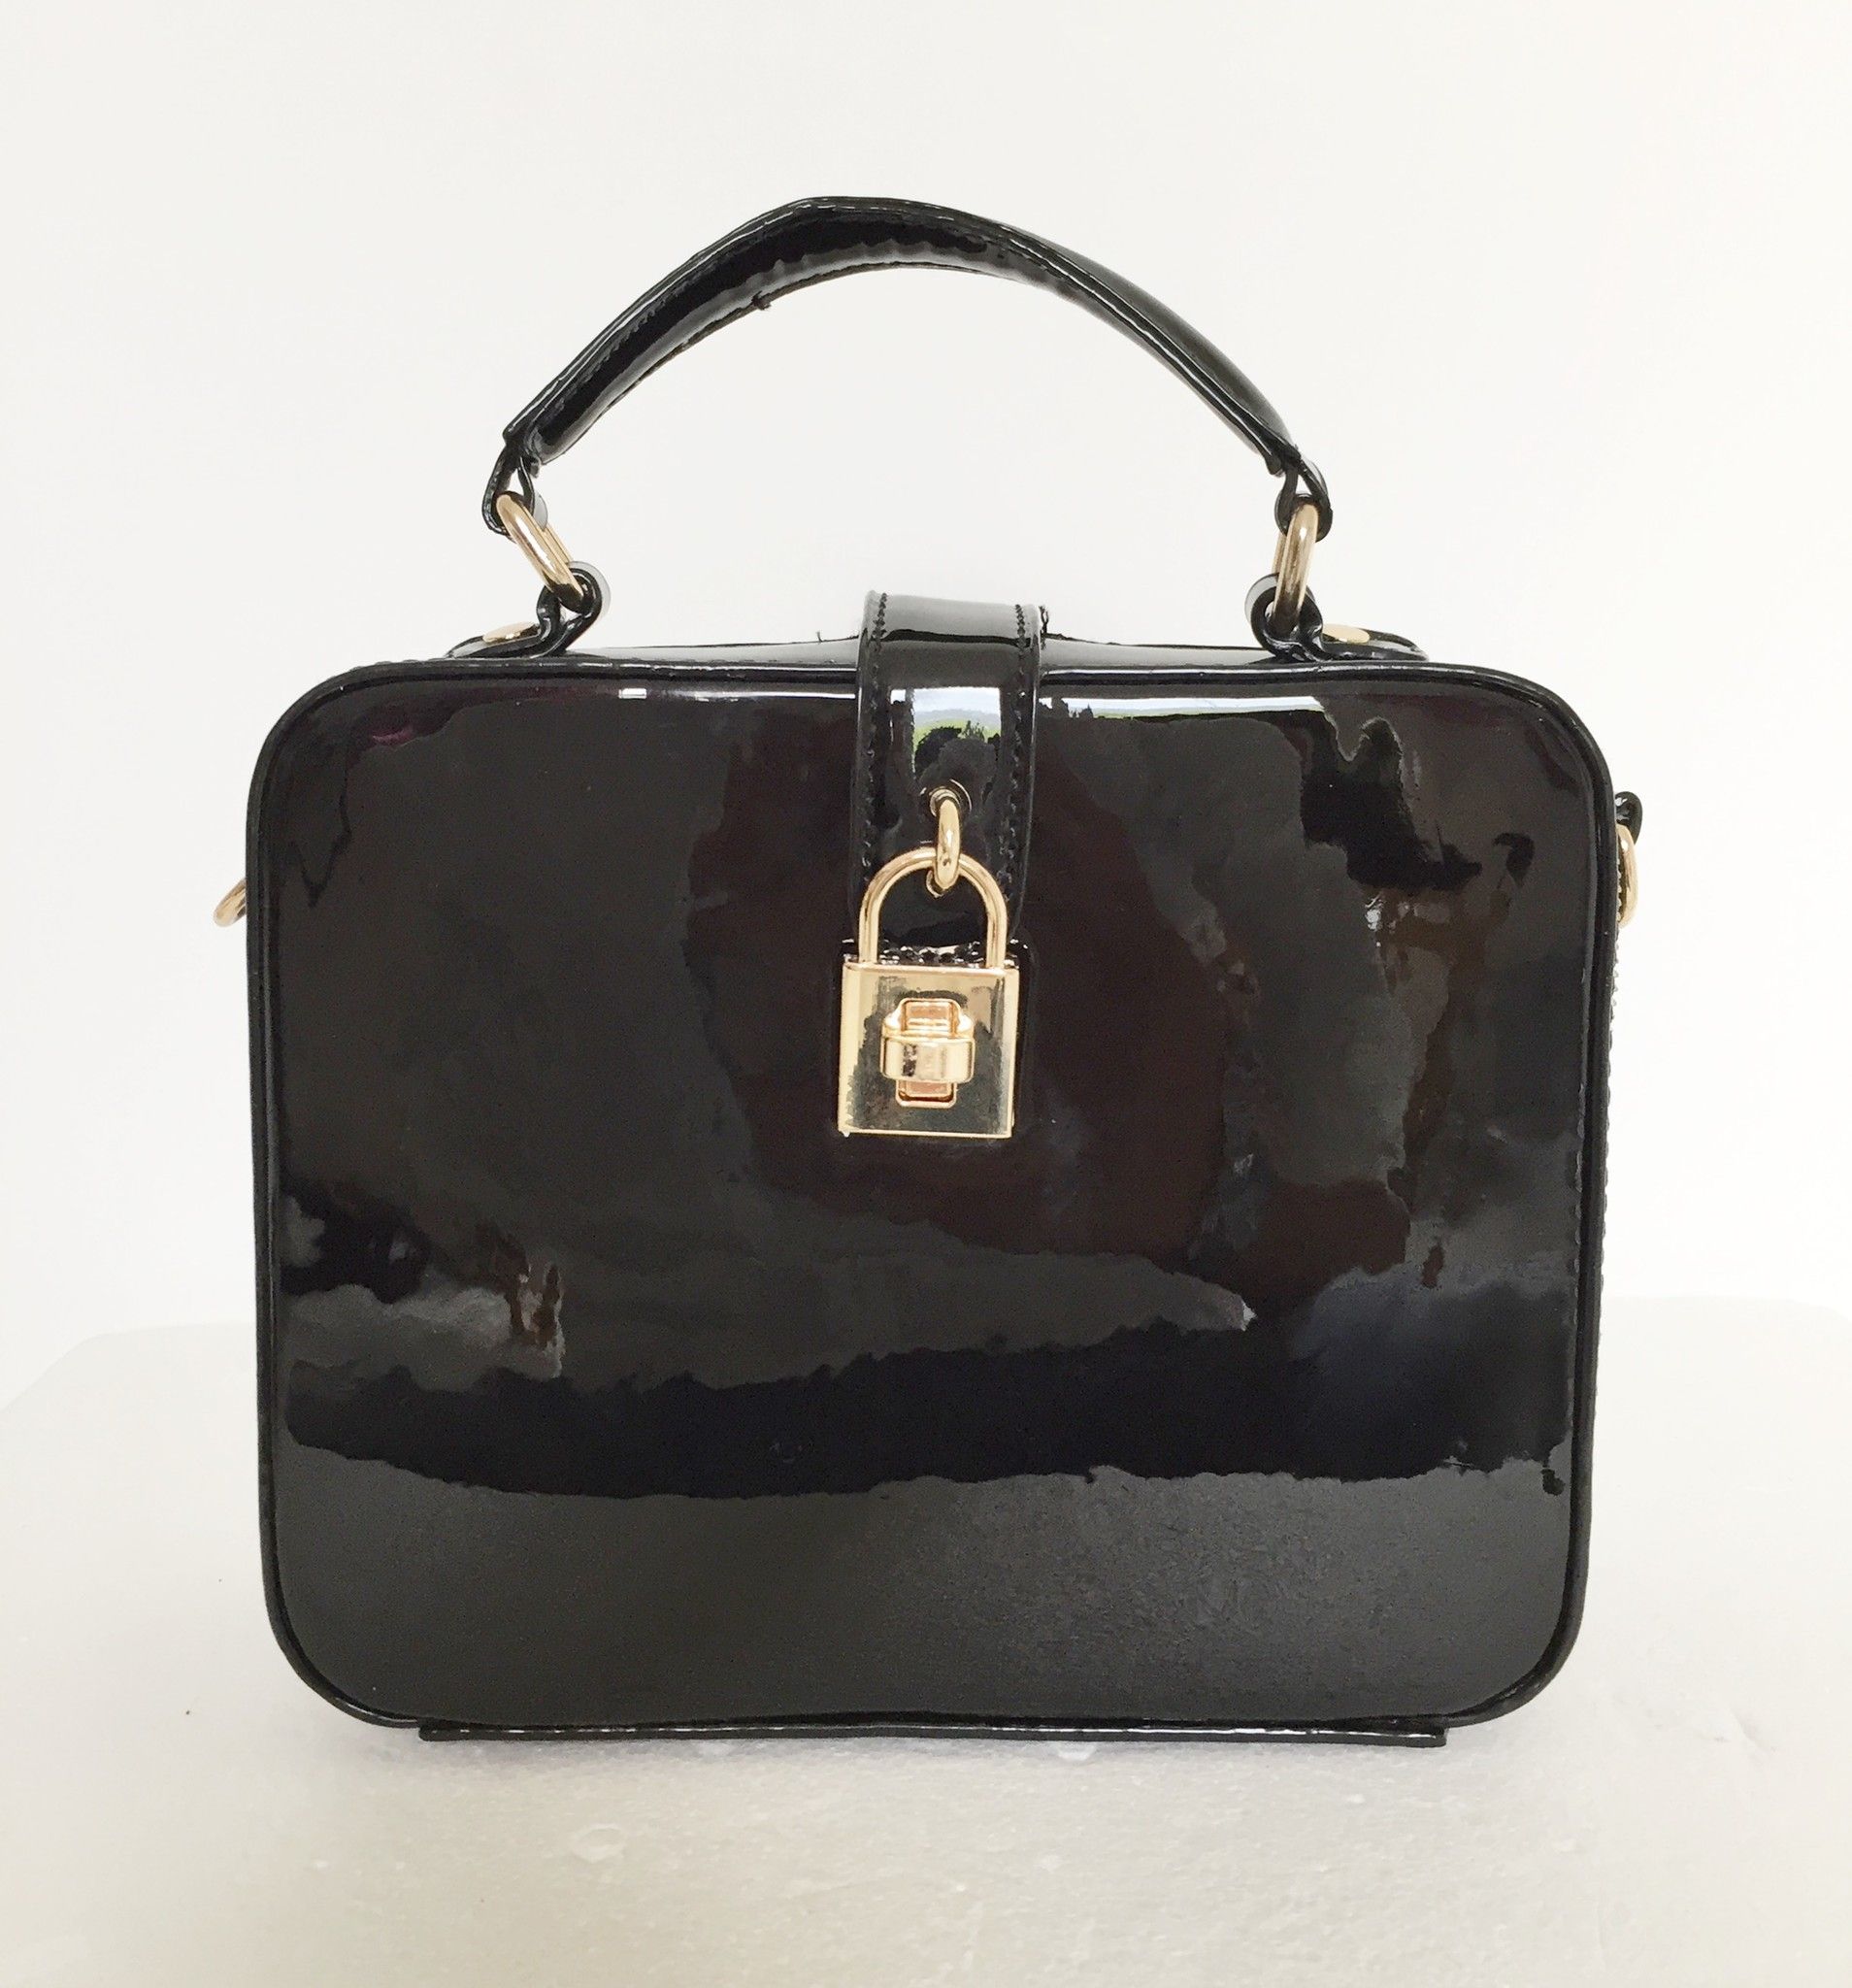 Rigid LadyBug Bag in paint Cod.6363